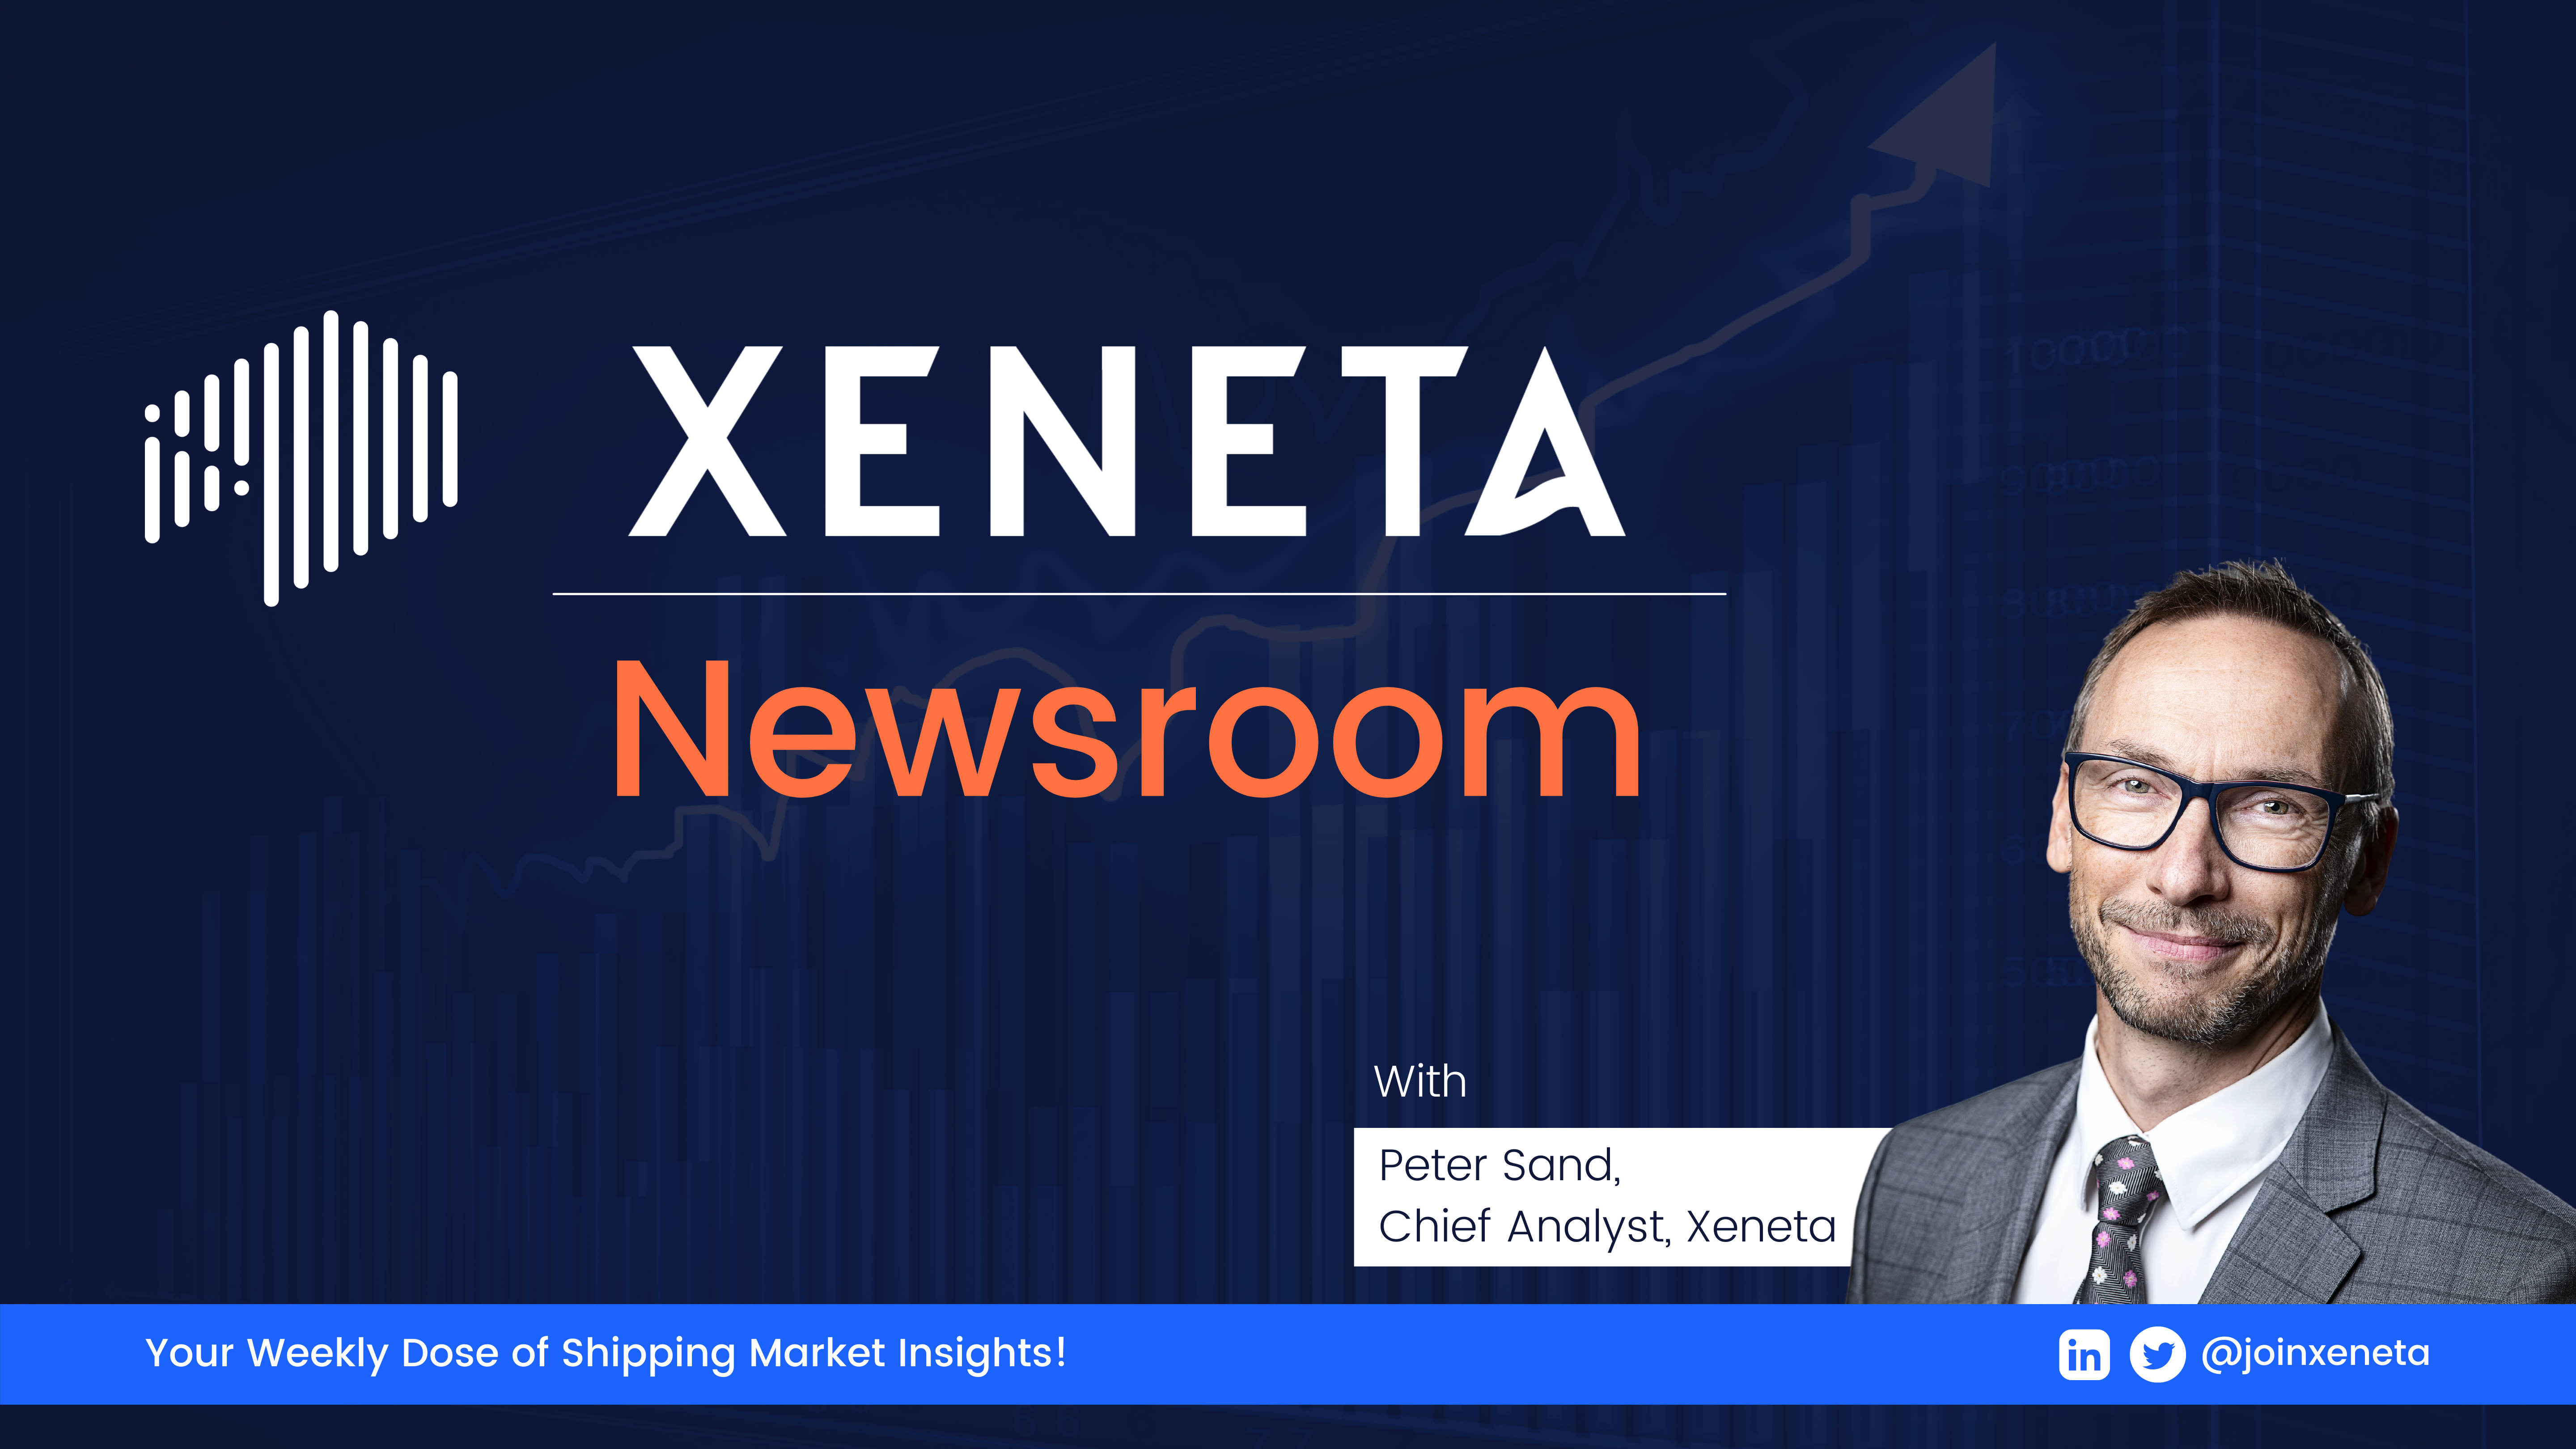 Xeneta Newsroom - May 5, 2022